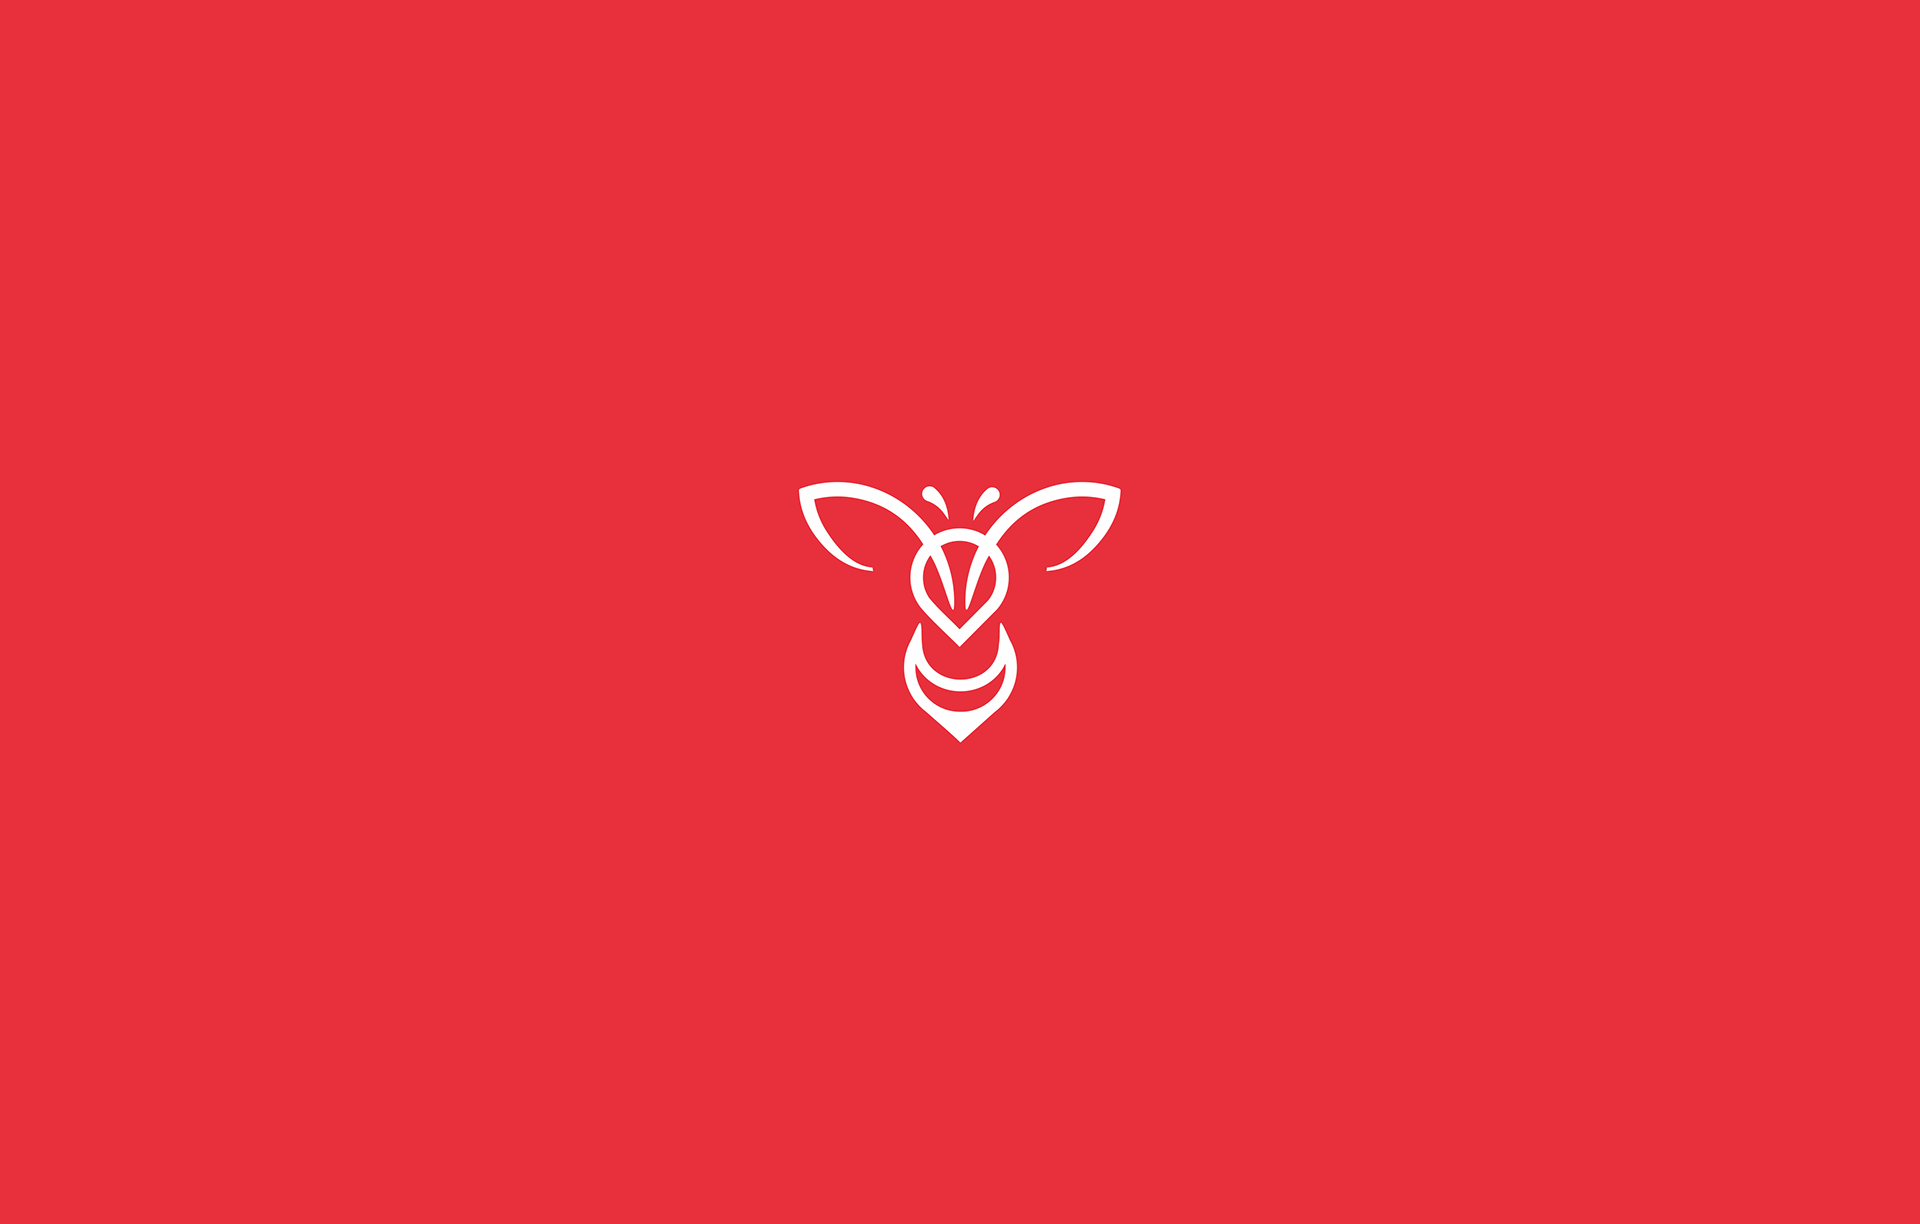 New Logo - Red Bee | Behance